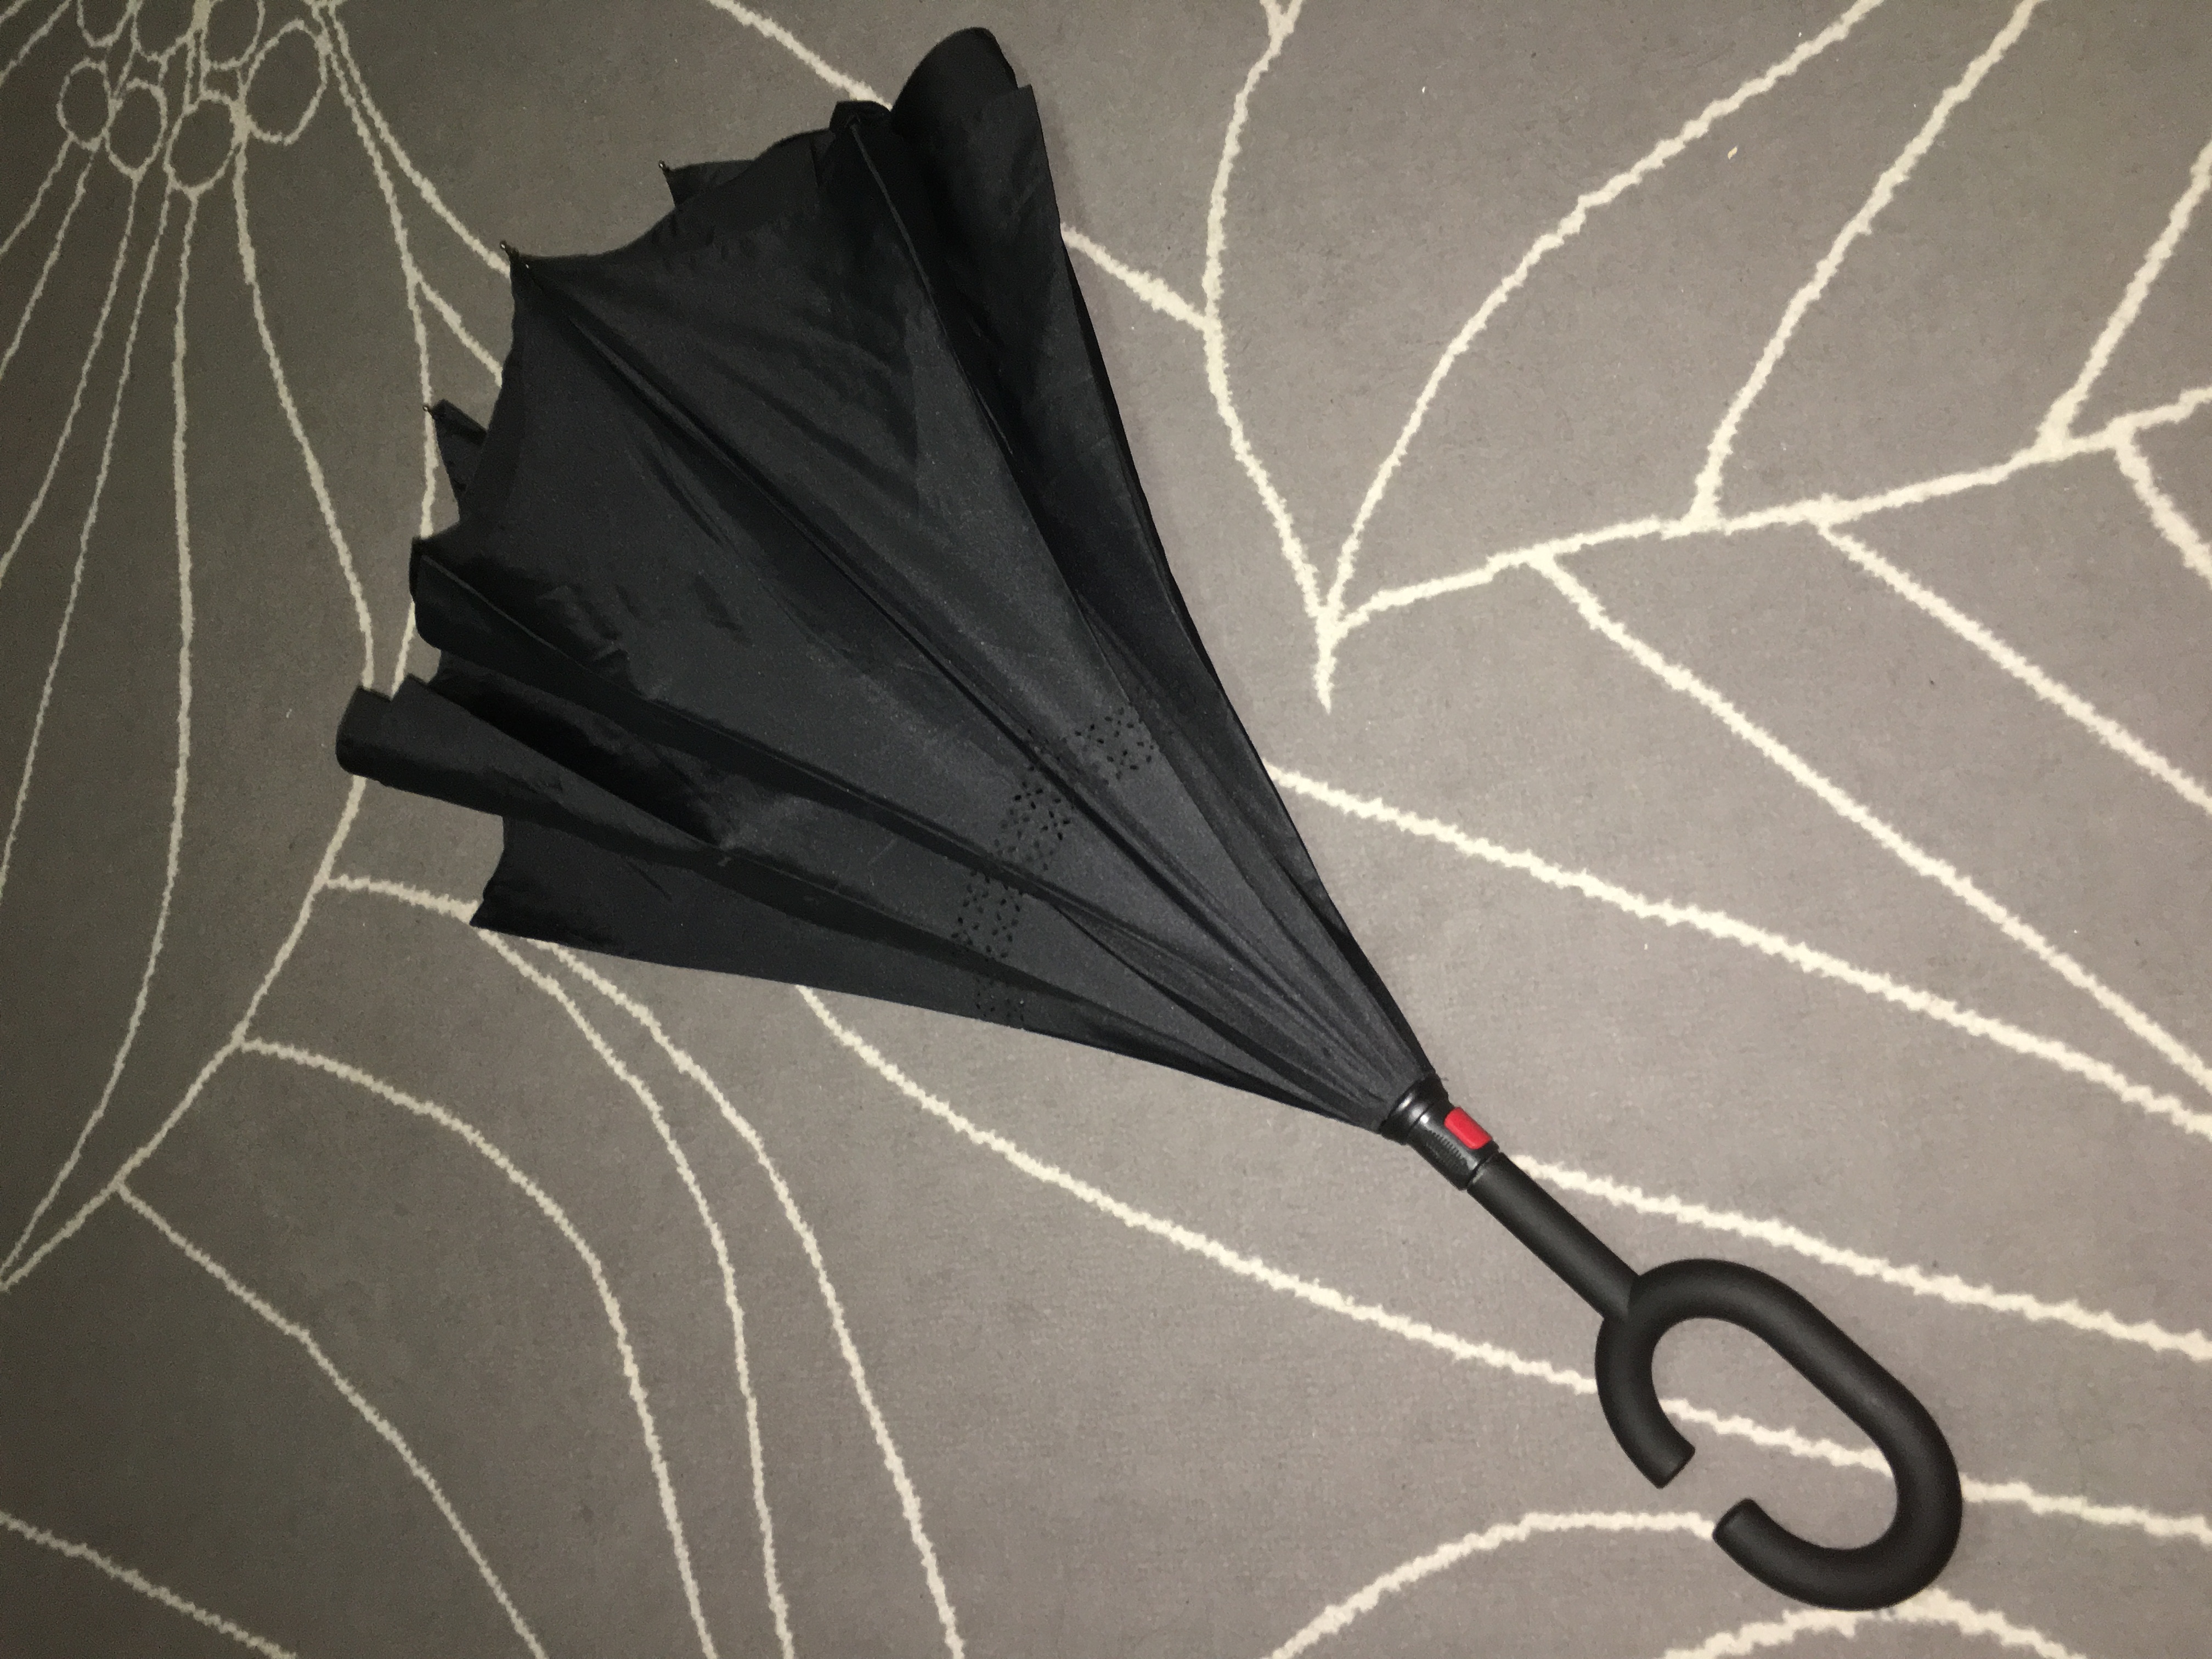 Stylish umbrella